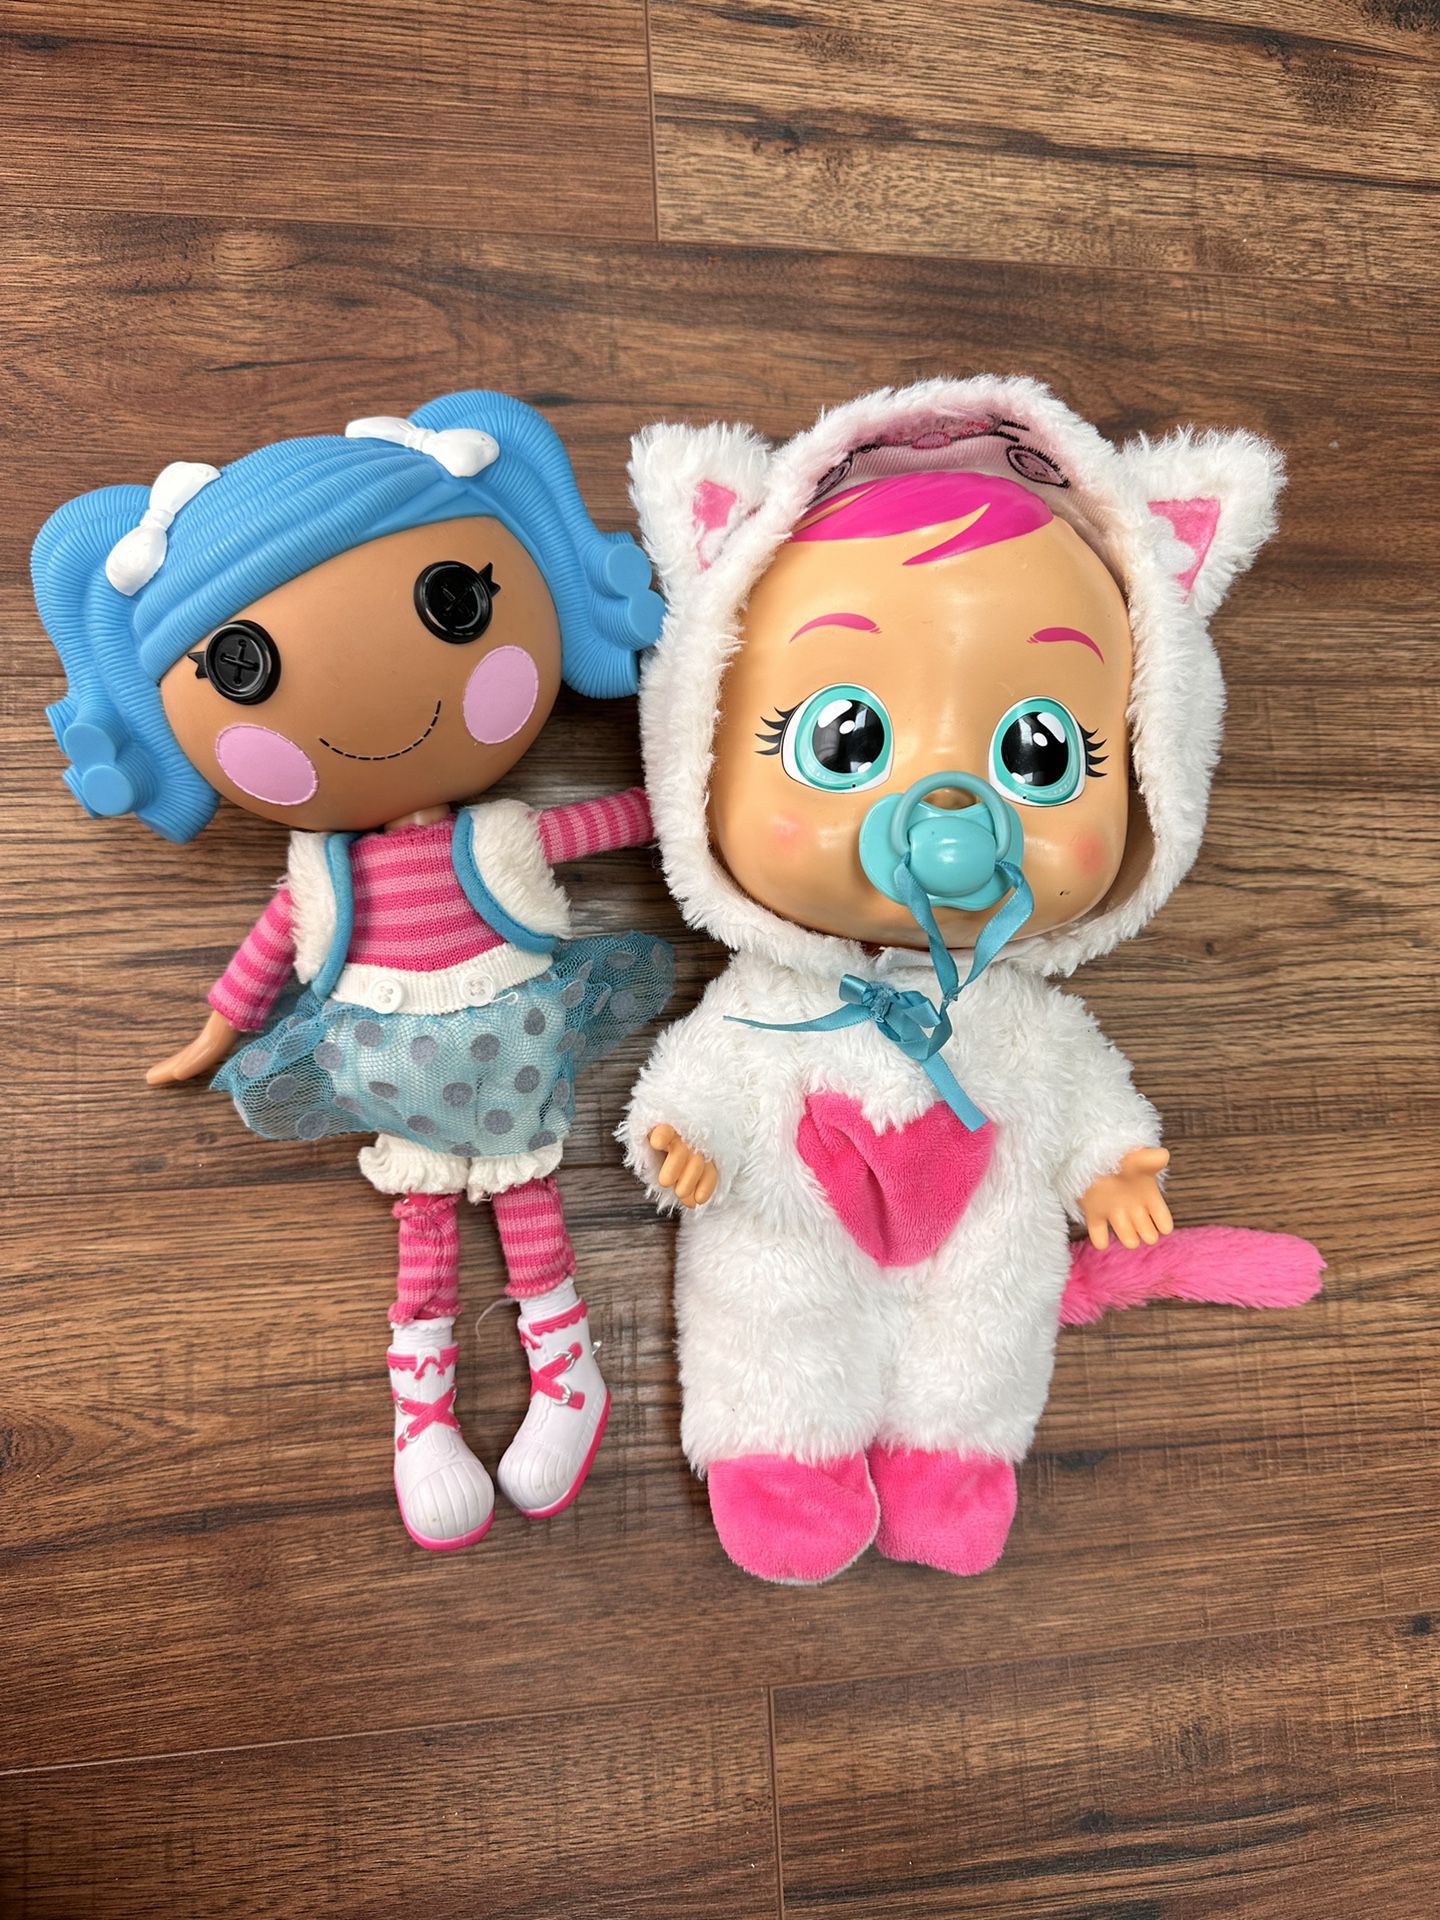 Dolls (Lalaloopsy & Cry Baby)